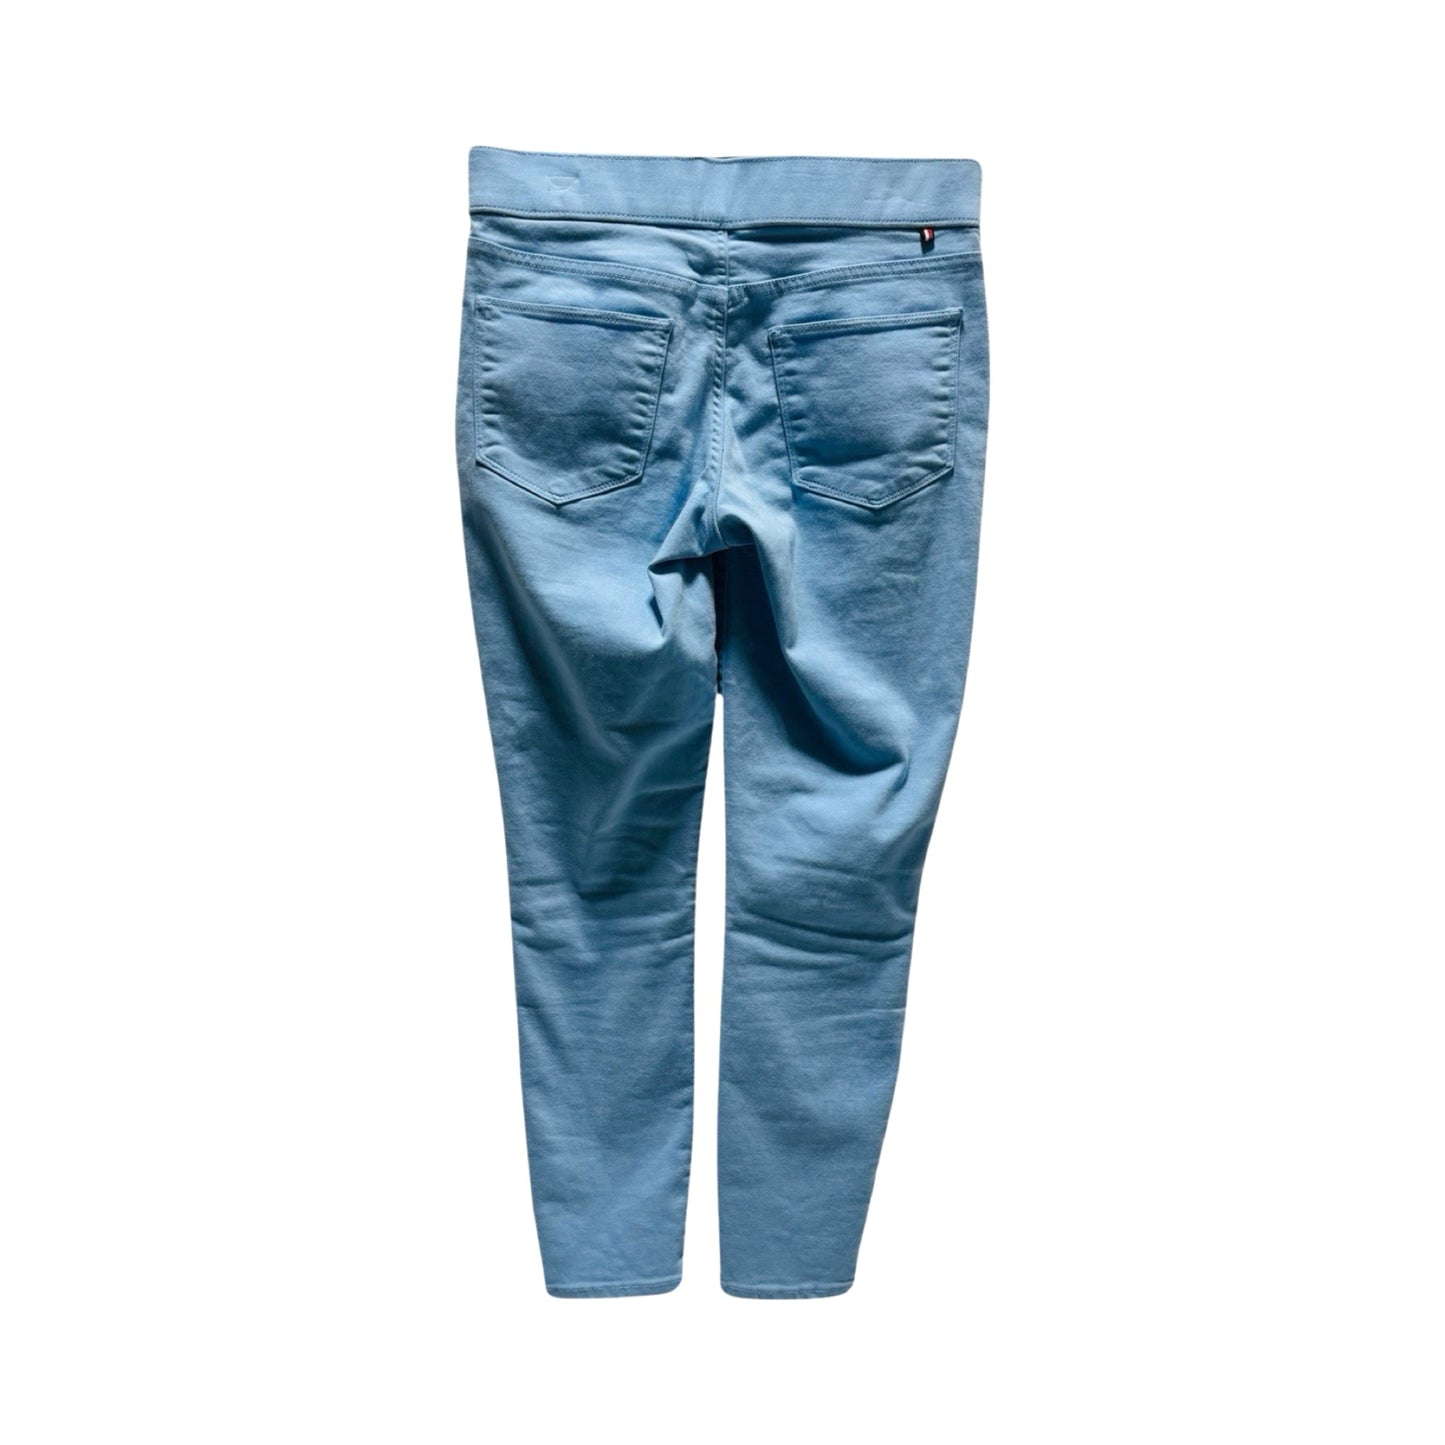 Pull On Light Blue Pants By Tommy Hilfiger  Size: 6